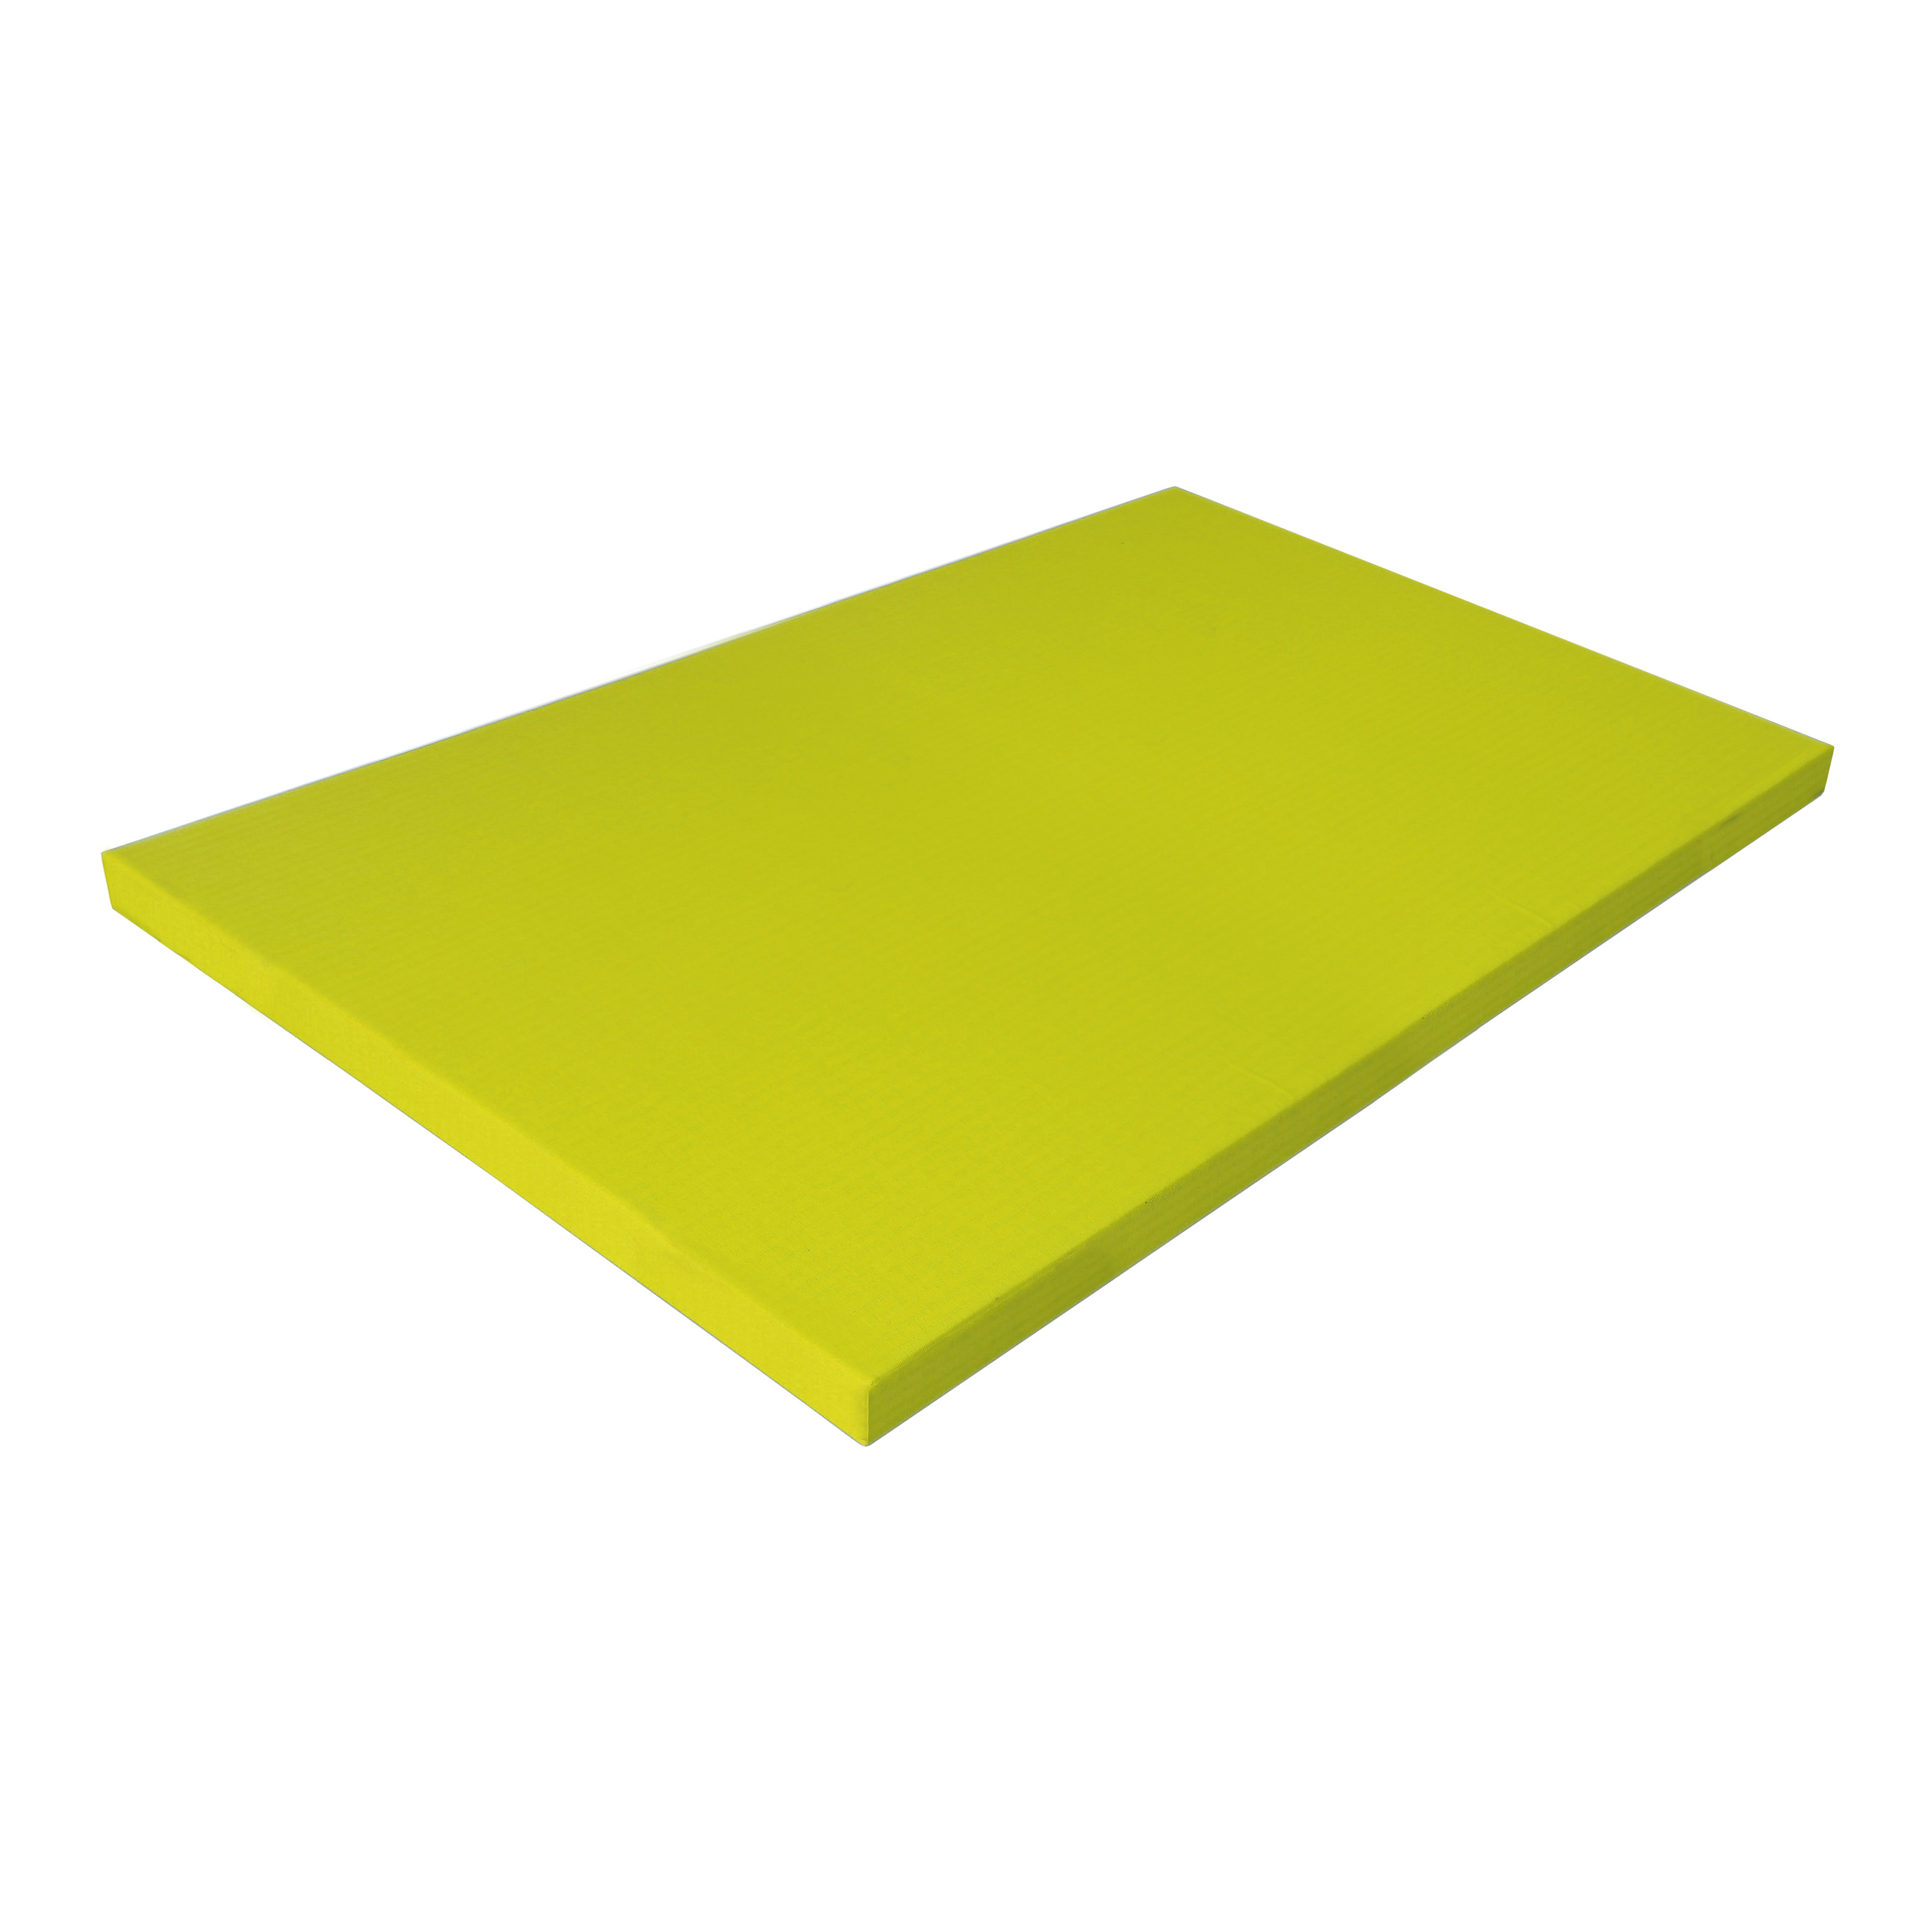 Fallschutzmatte 'Light' gelb, 200 x 100 x 6 cm, 7,4 kg